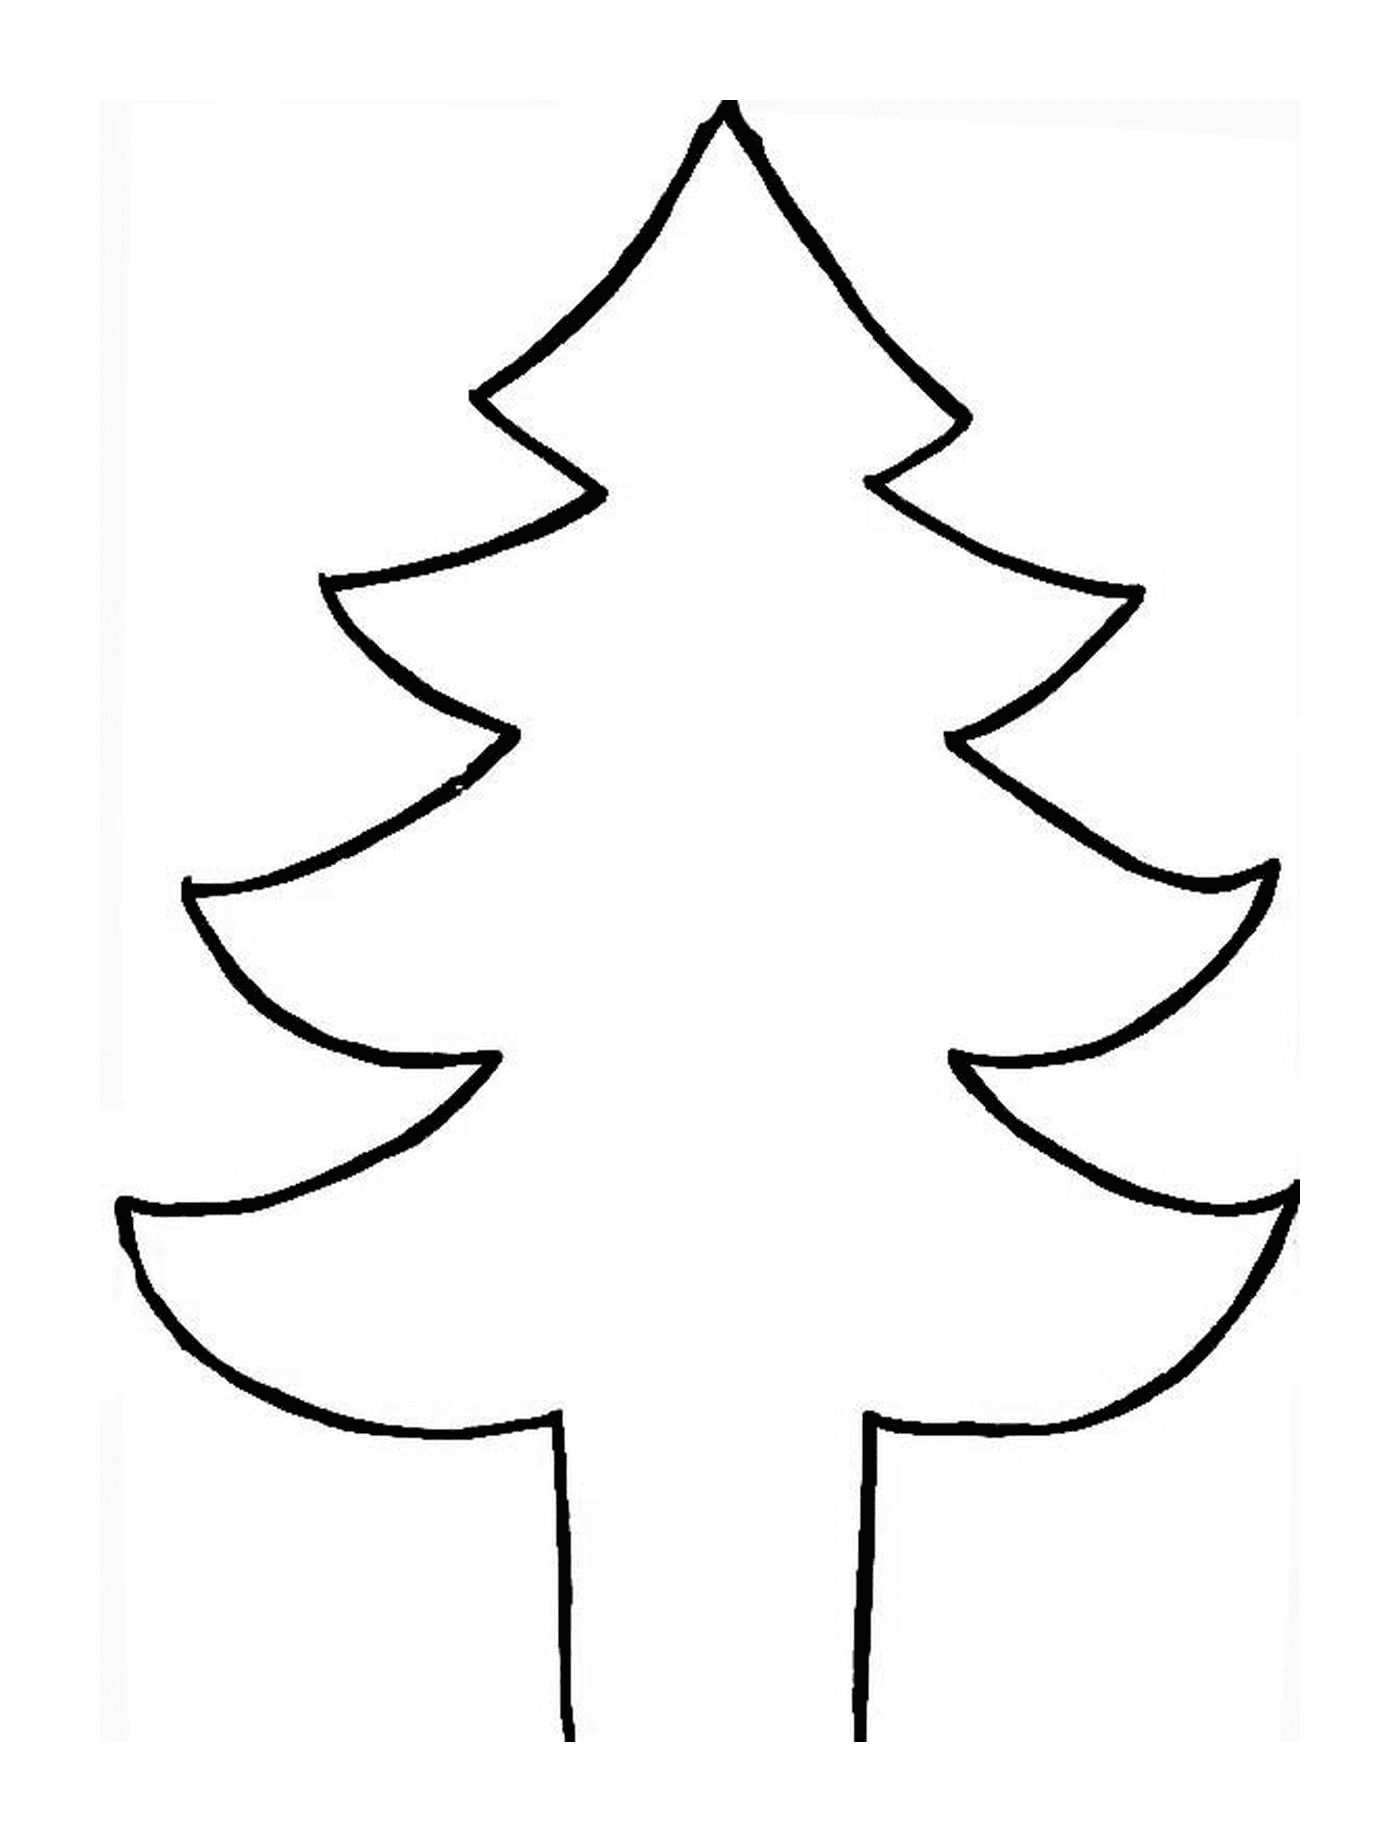  एक क्लासिक क्रिसमस पेड़ 